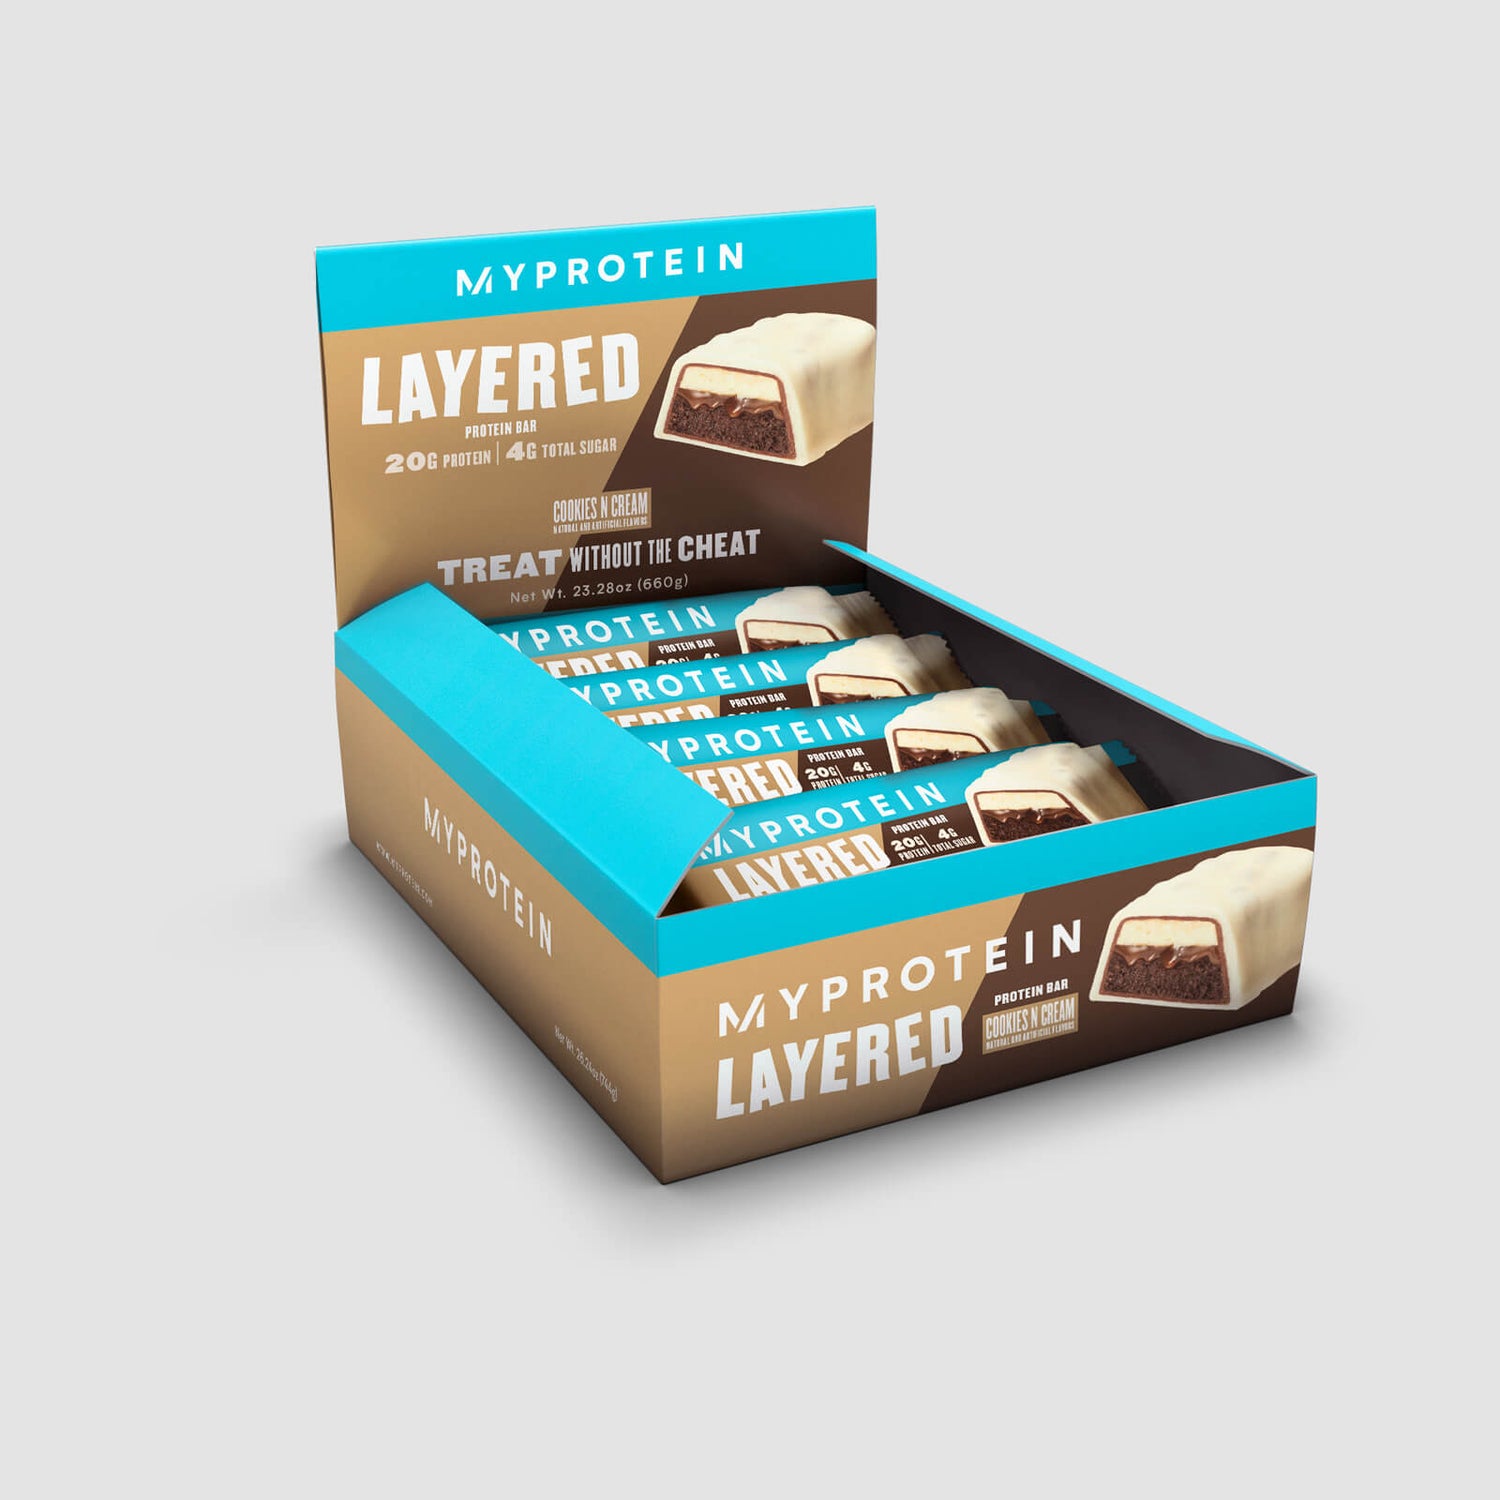 Layered Bar - Cookies and Cream